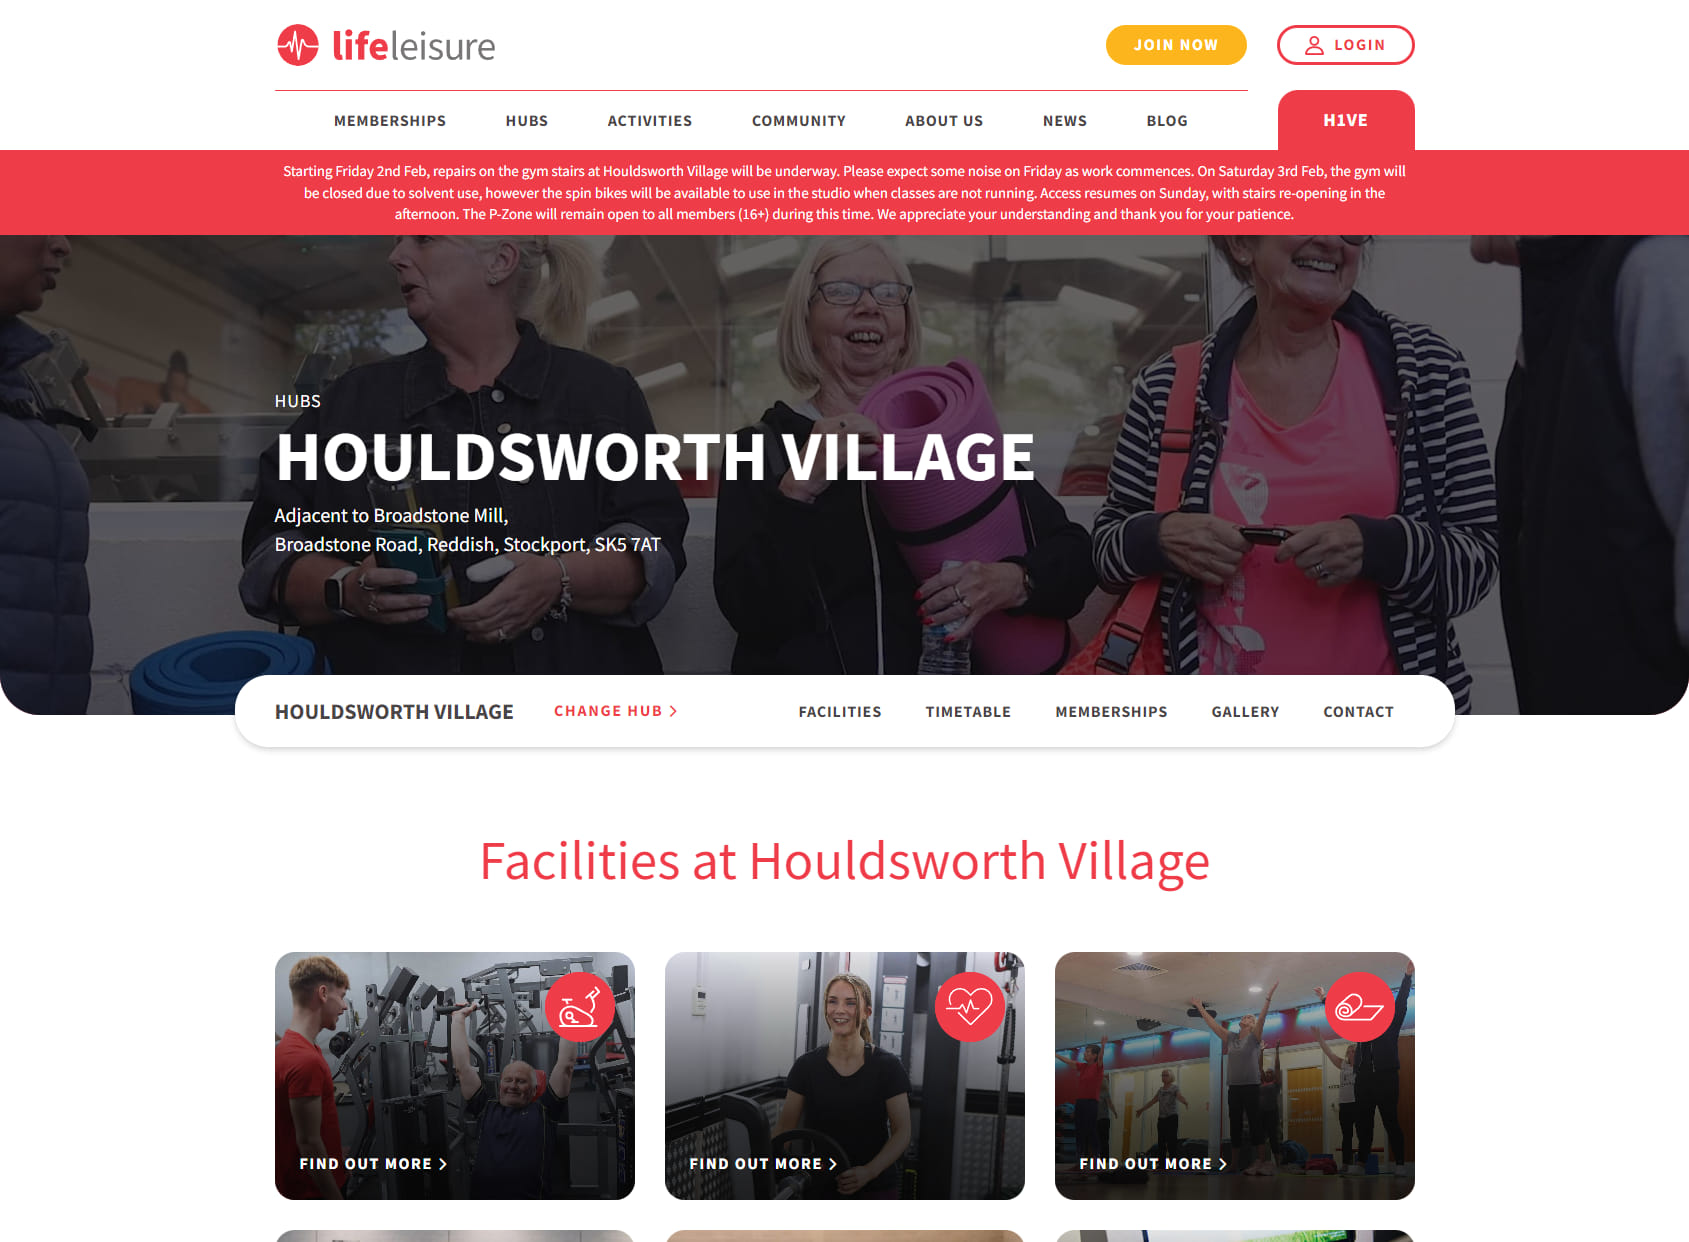 Life Leisure Houldsworth Village